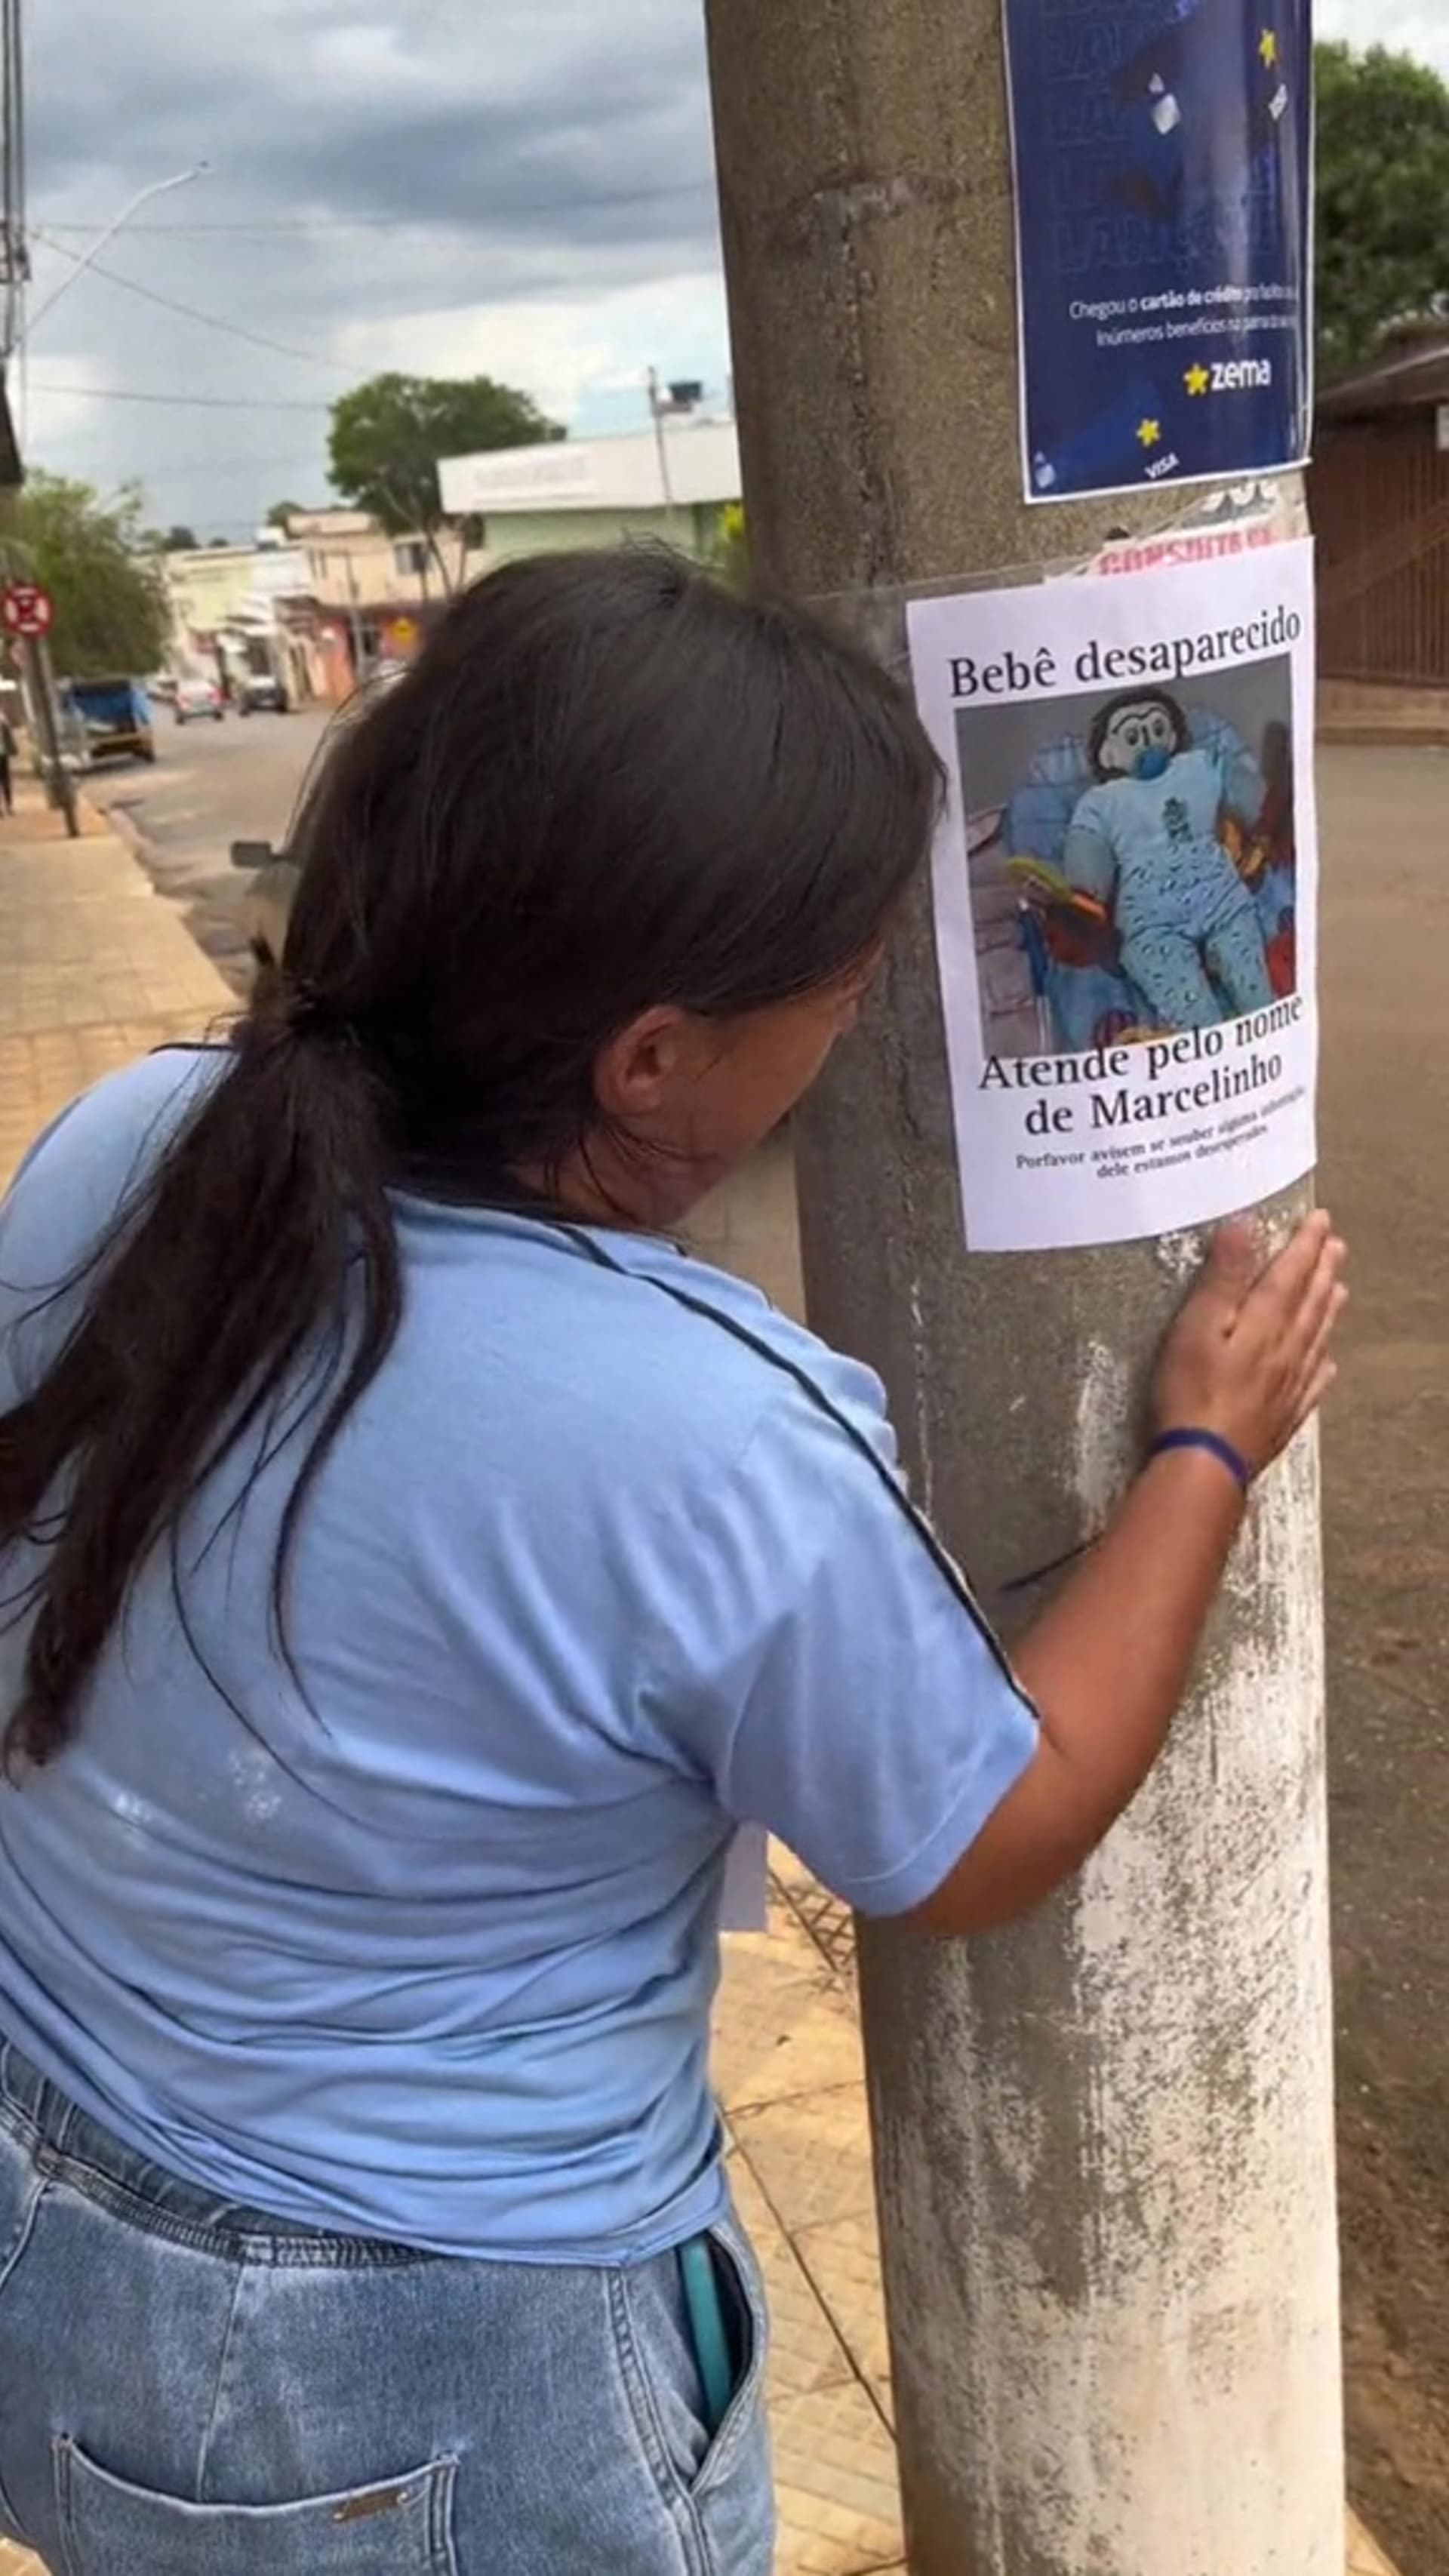 Meirivone Rocha Moraes vylepovala plakáty pro synovo nalezení.